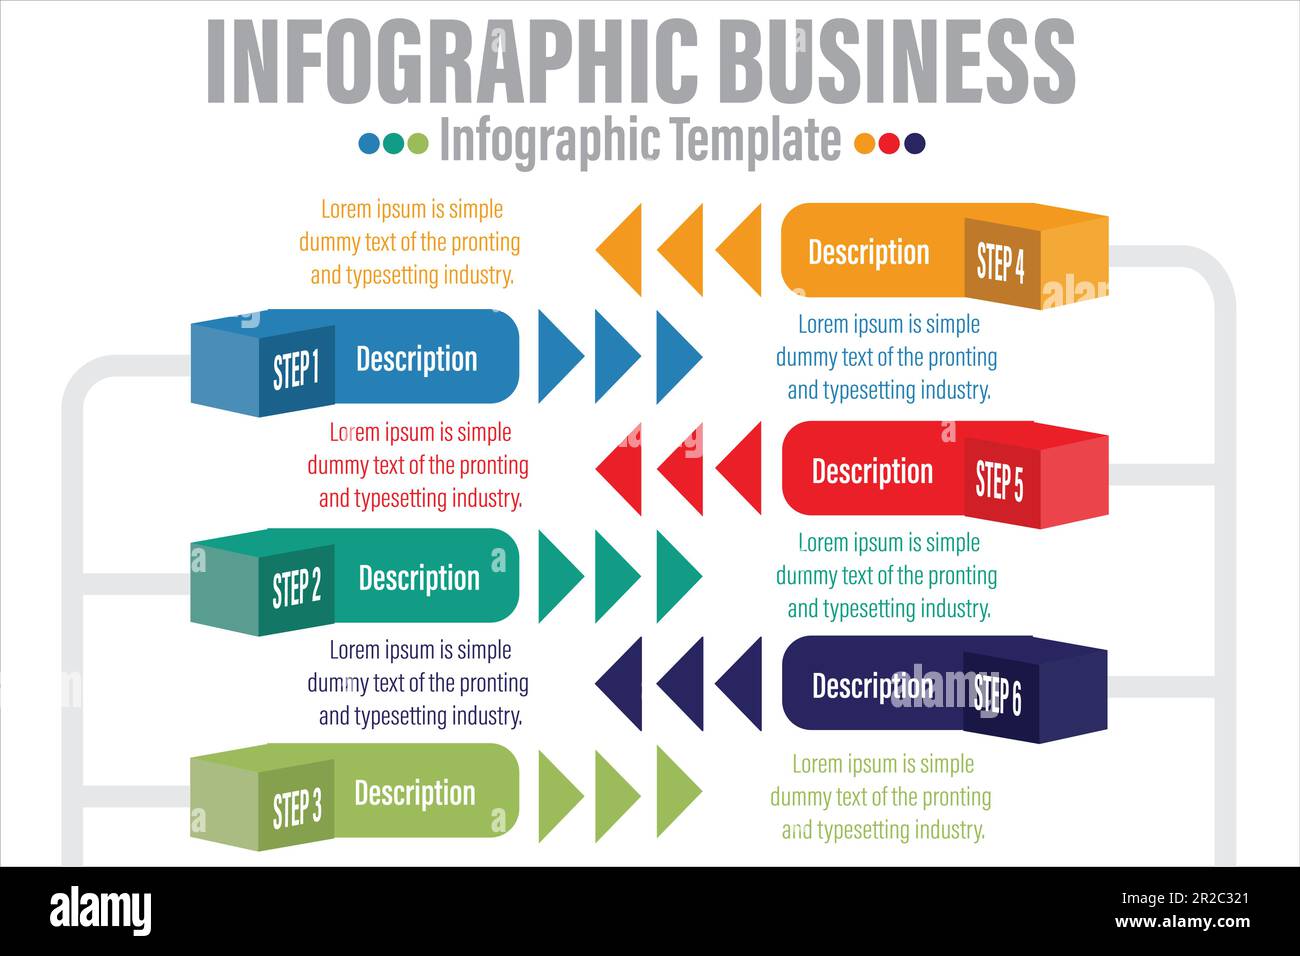 infographic design work